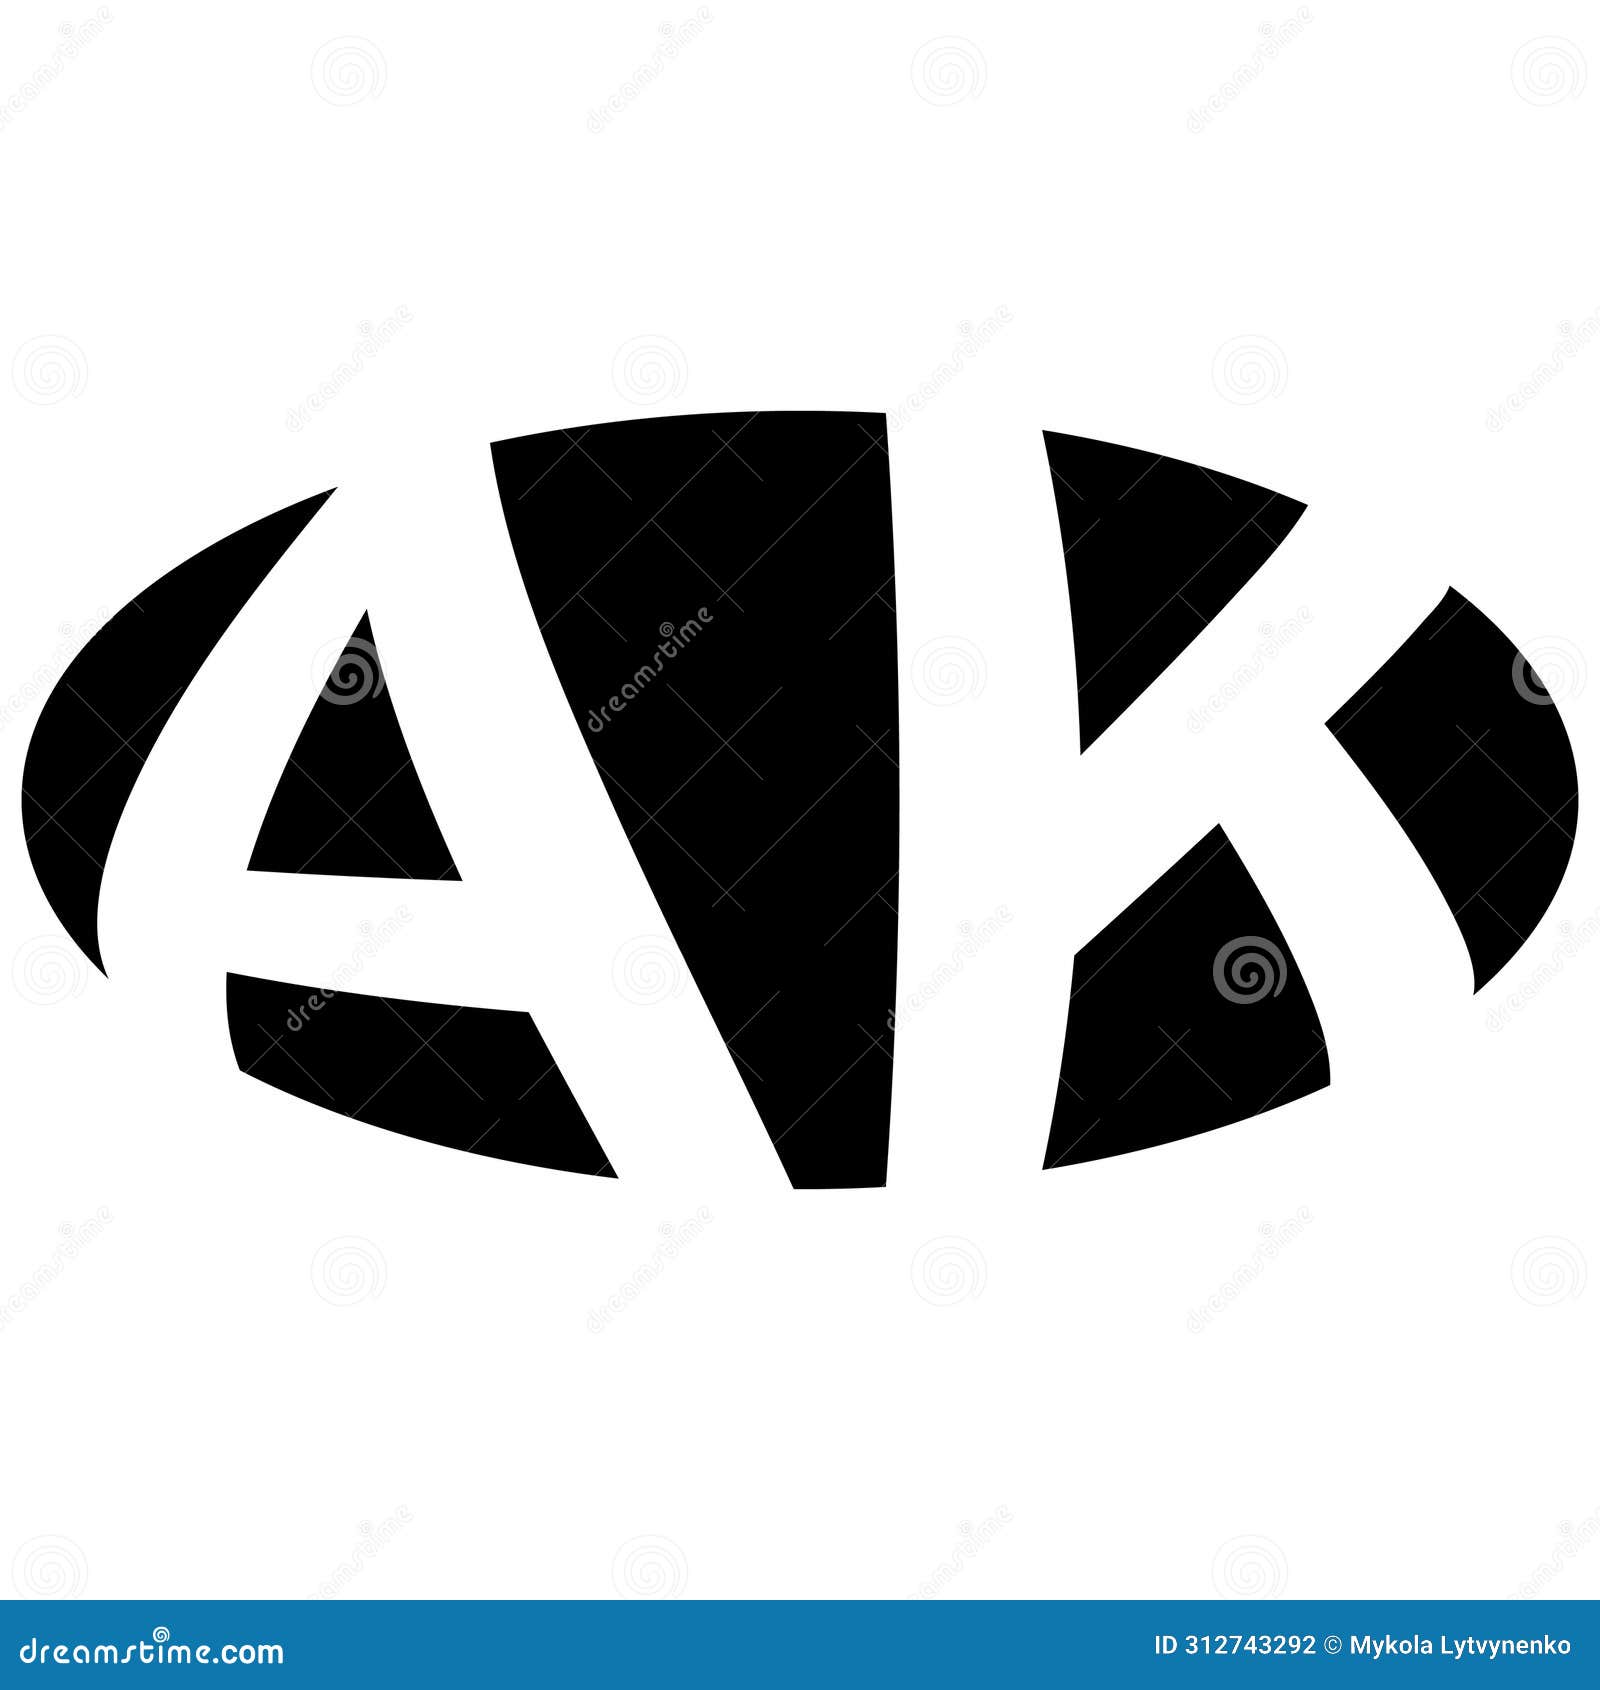 oval logo double letter a k two letters ak ka